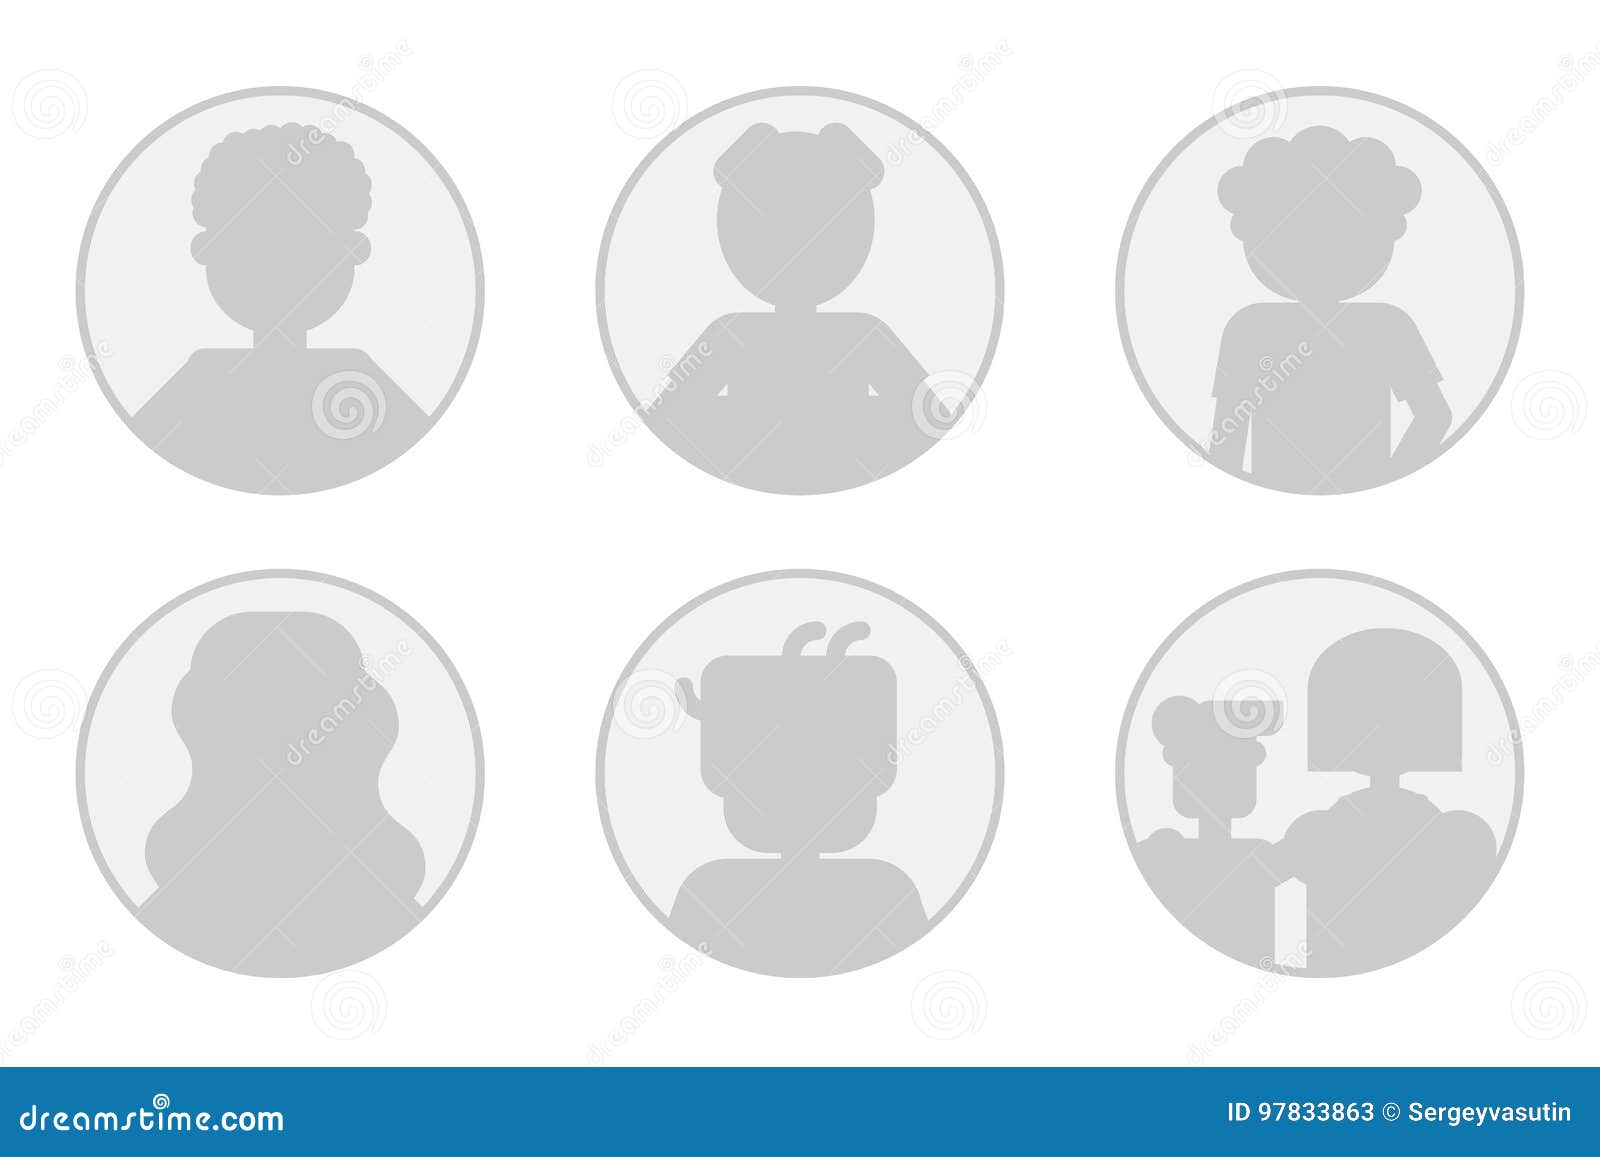 Vector set of monochrome six avatars - men, woman and family - round avatars